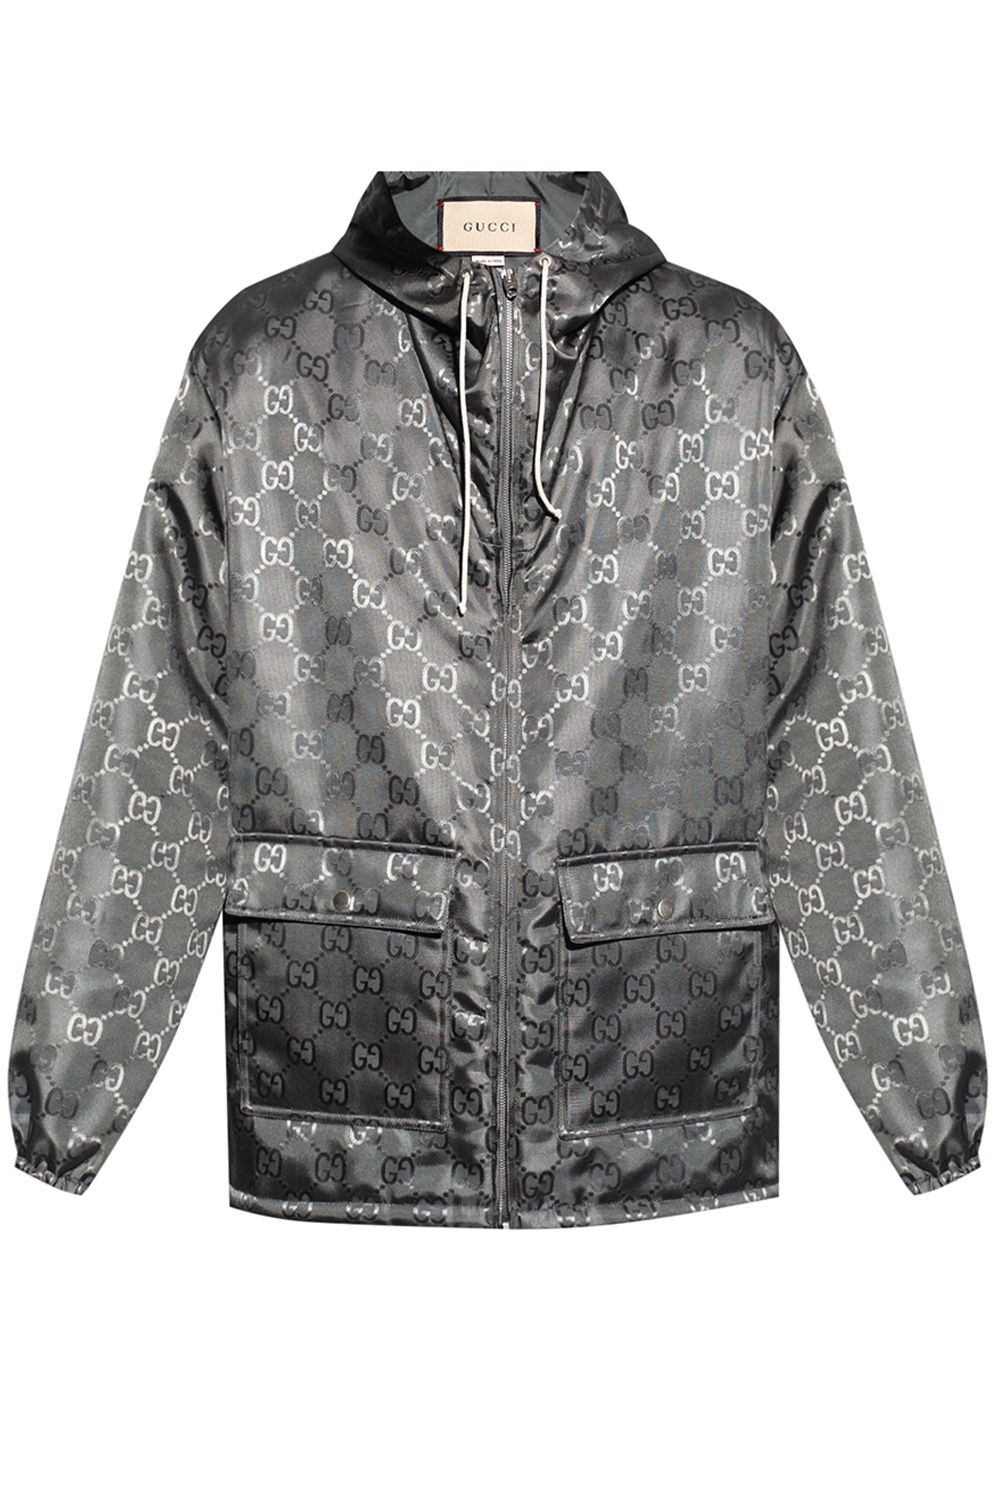 Gucci Monogram Windbreaker Jacket in Black for Men